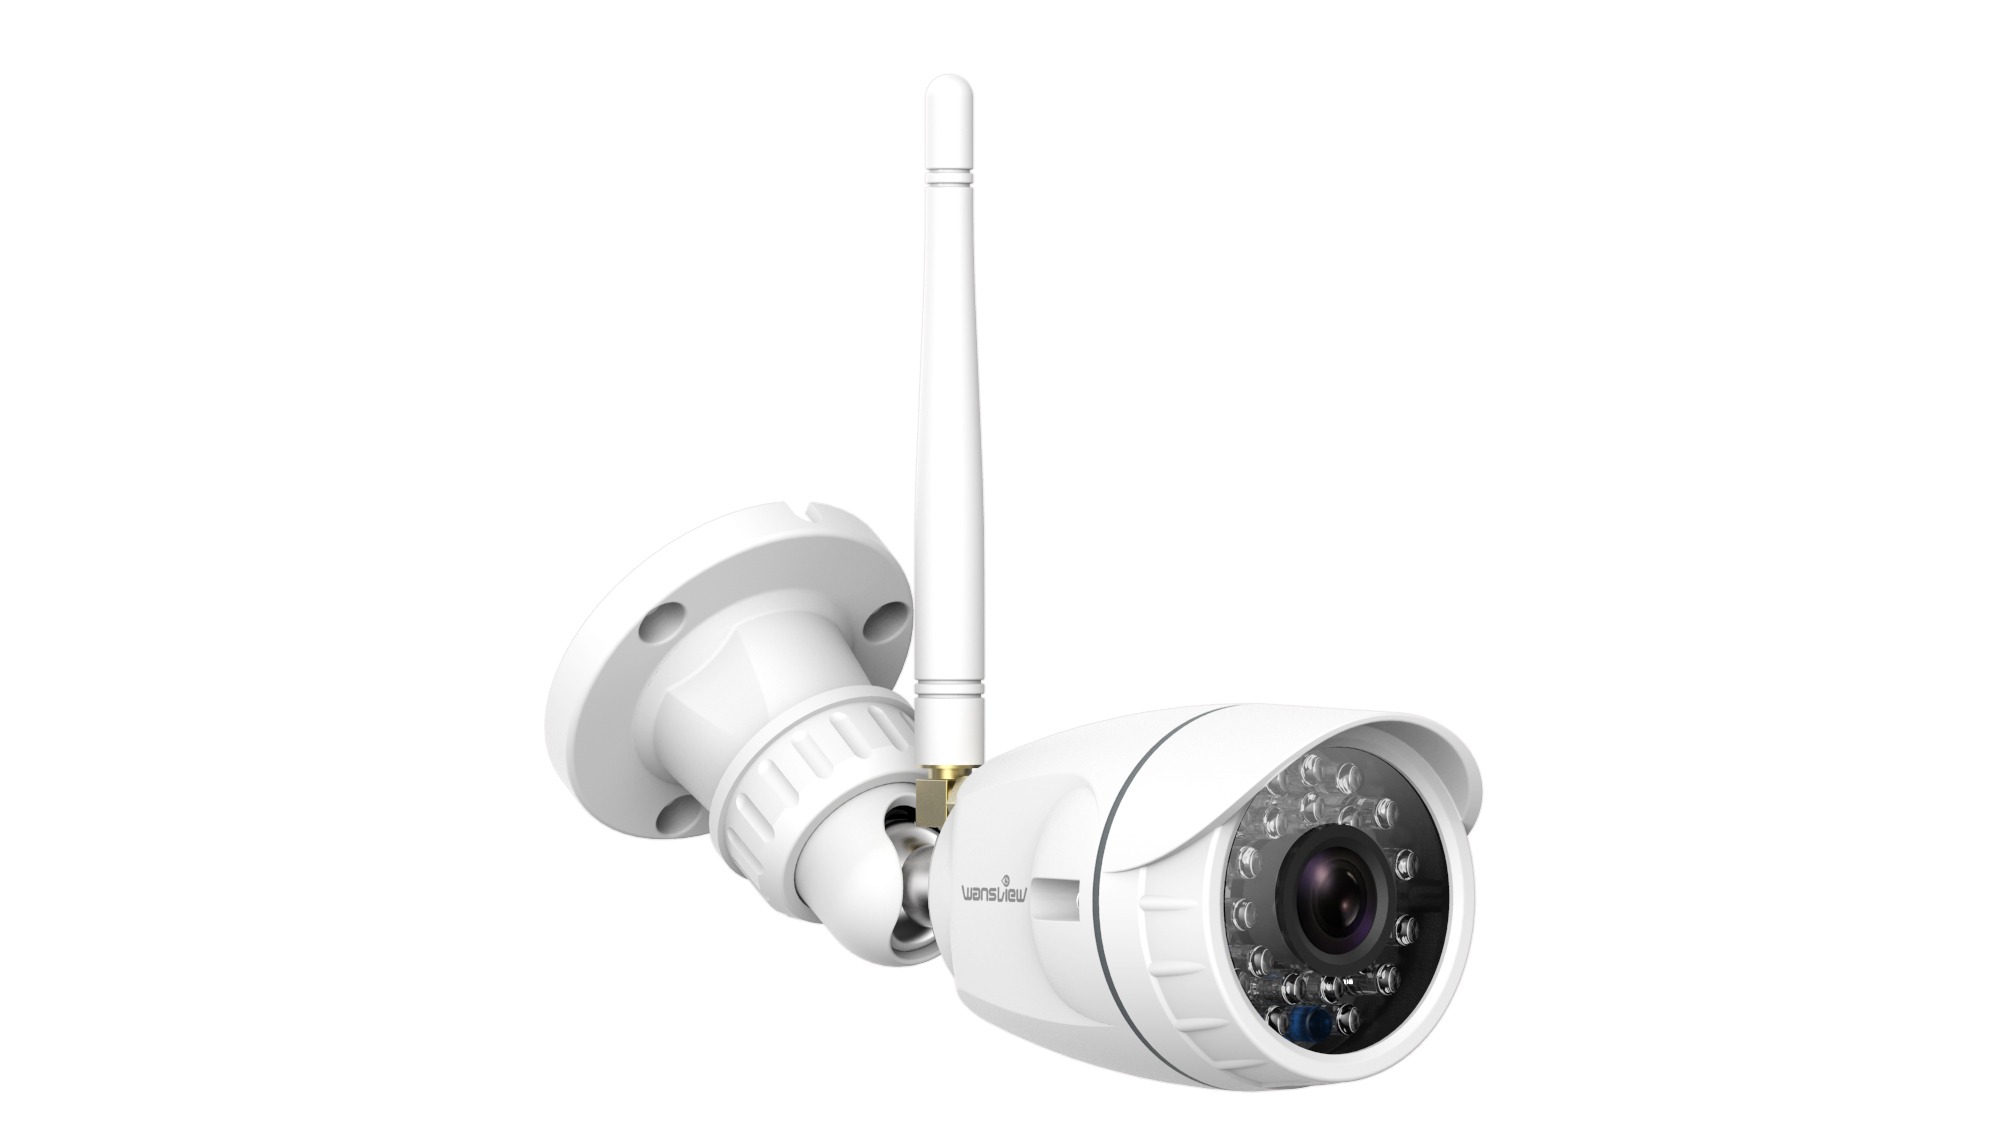  How to install the surveillance camera?